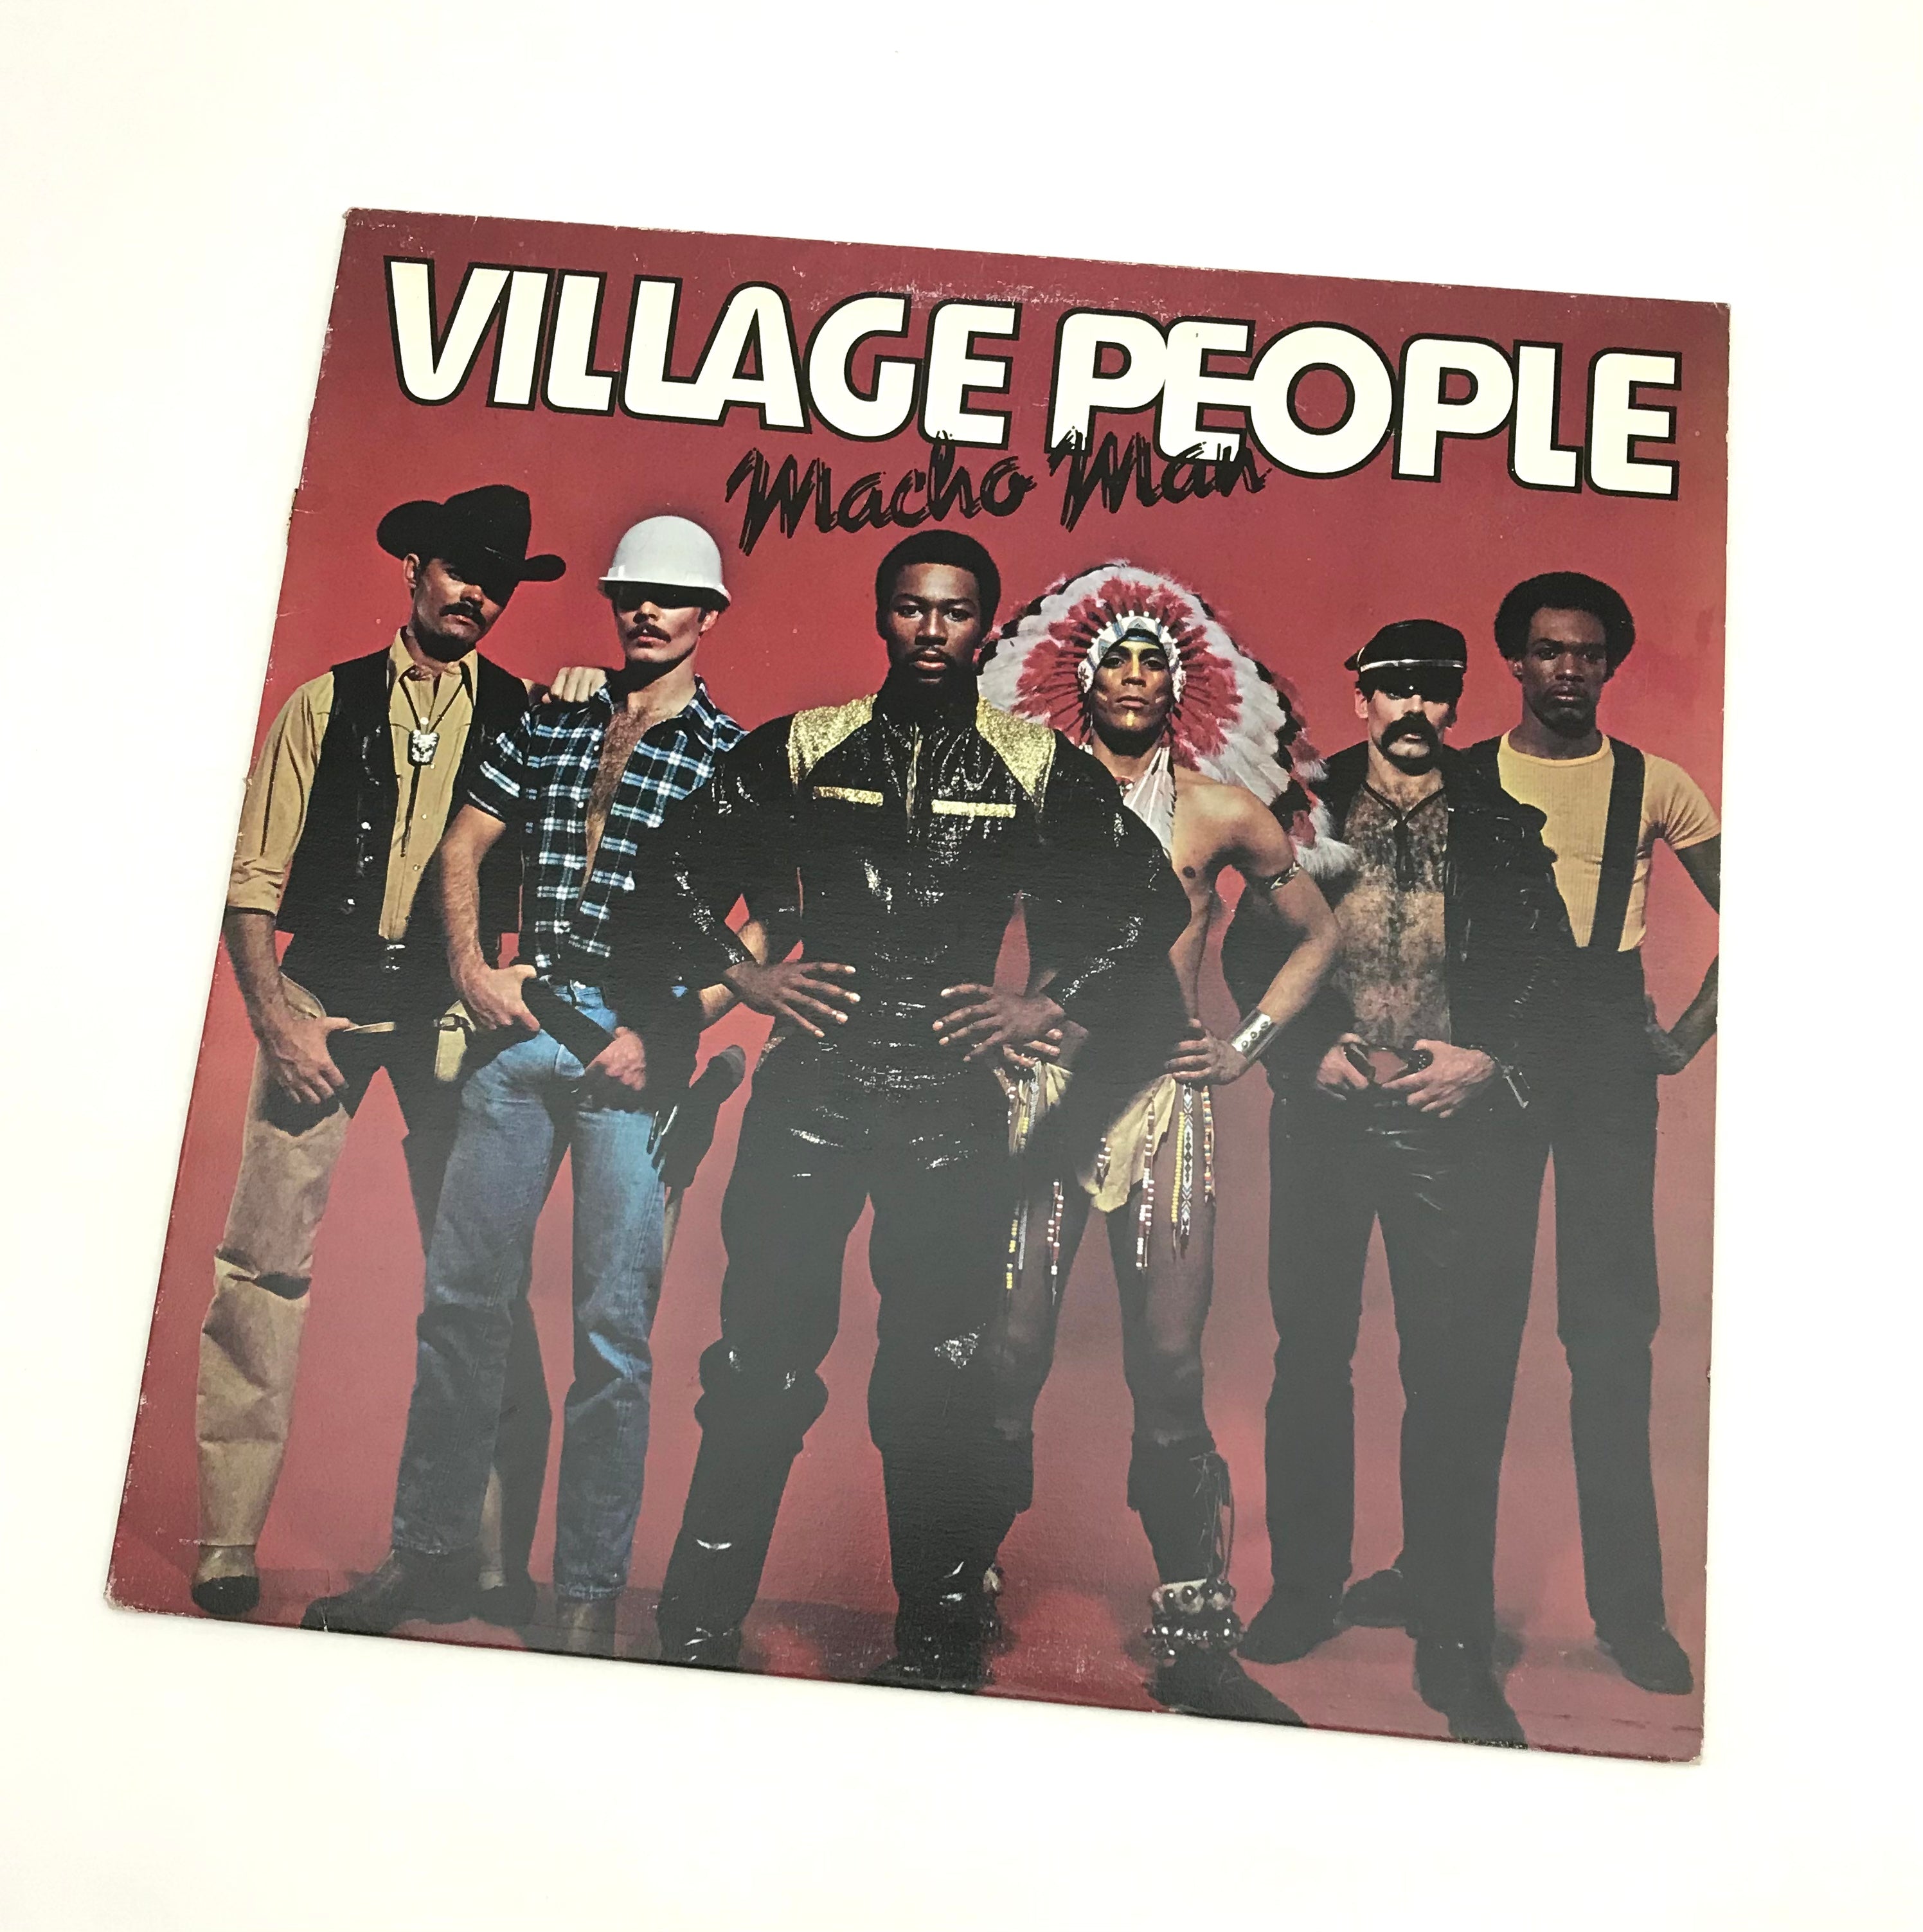 Village People - Macho Man - Vinyl LP - 1978